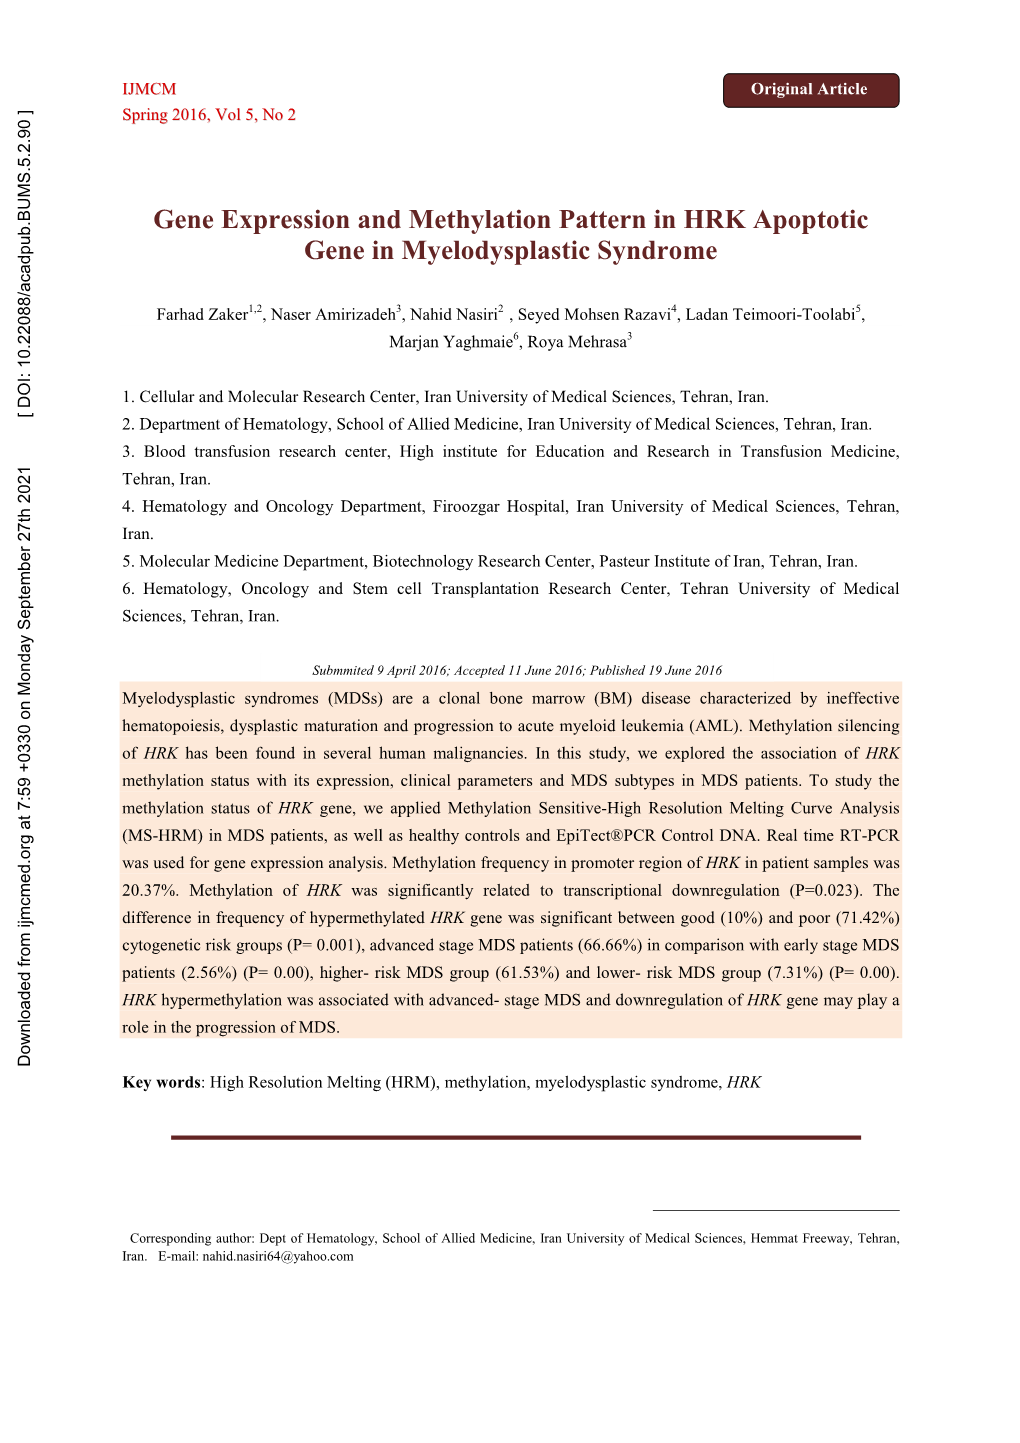 Gene Expression and Methylation Pattern in HRK Apoptotic Gene in Myelodysplastic Syndrome